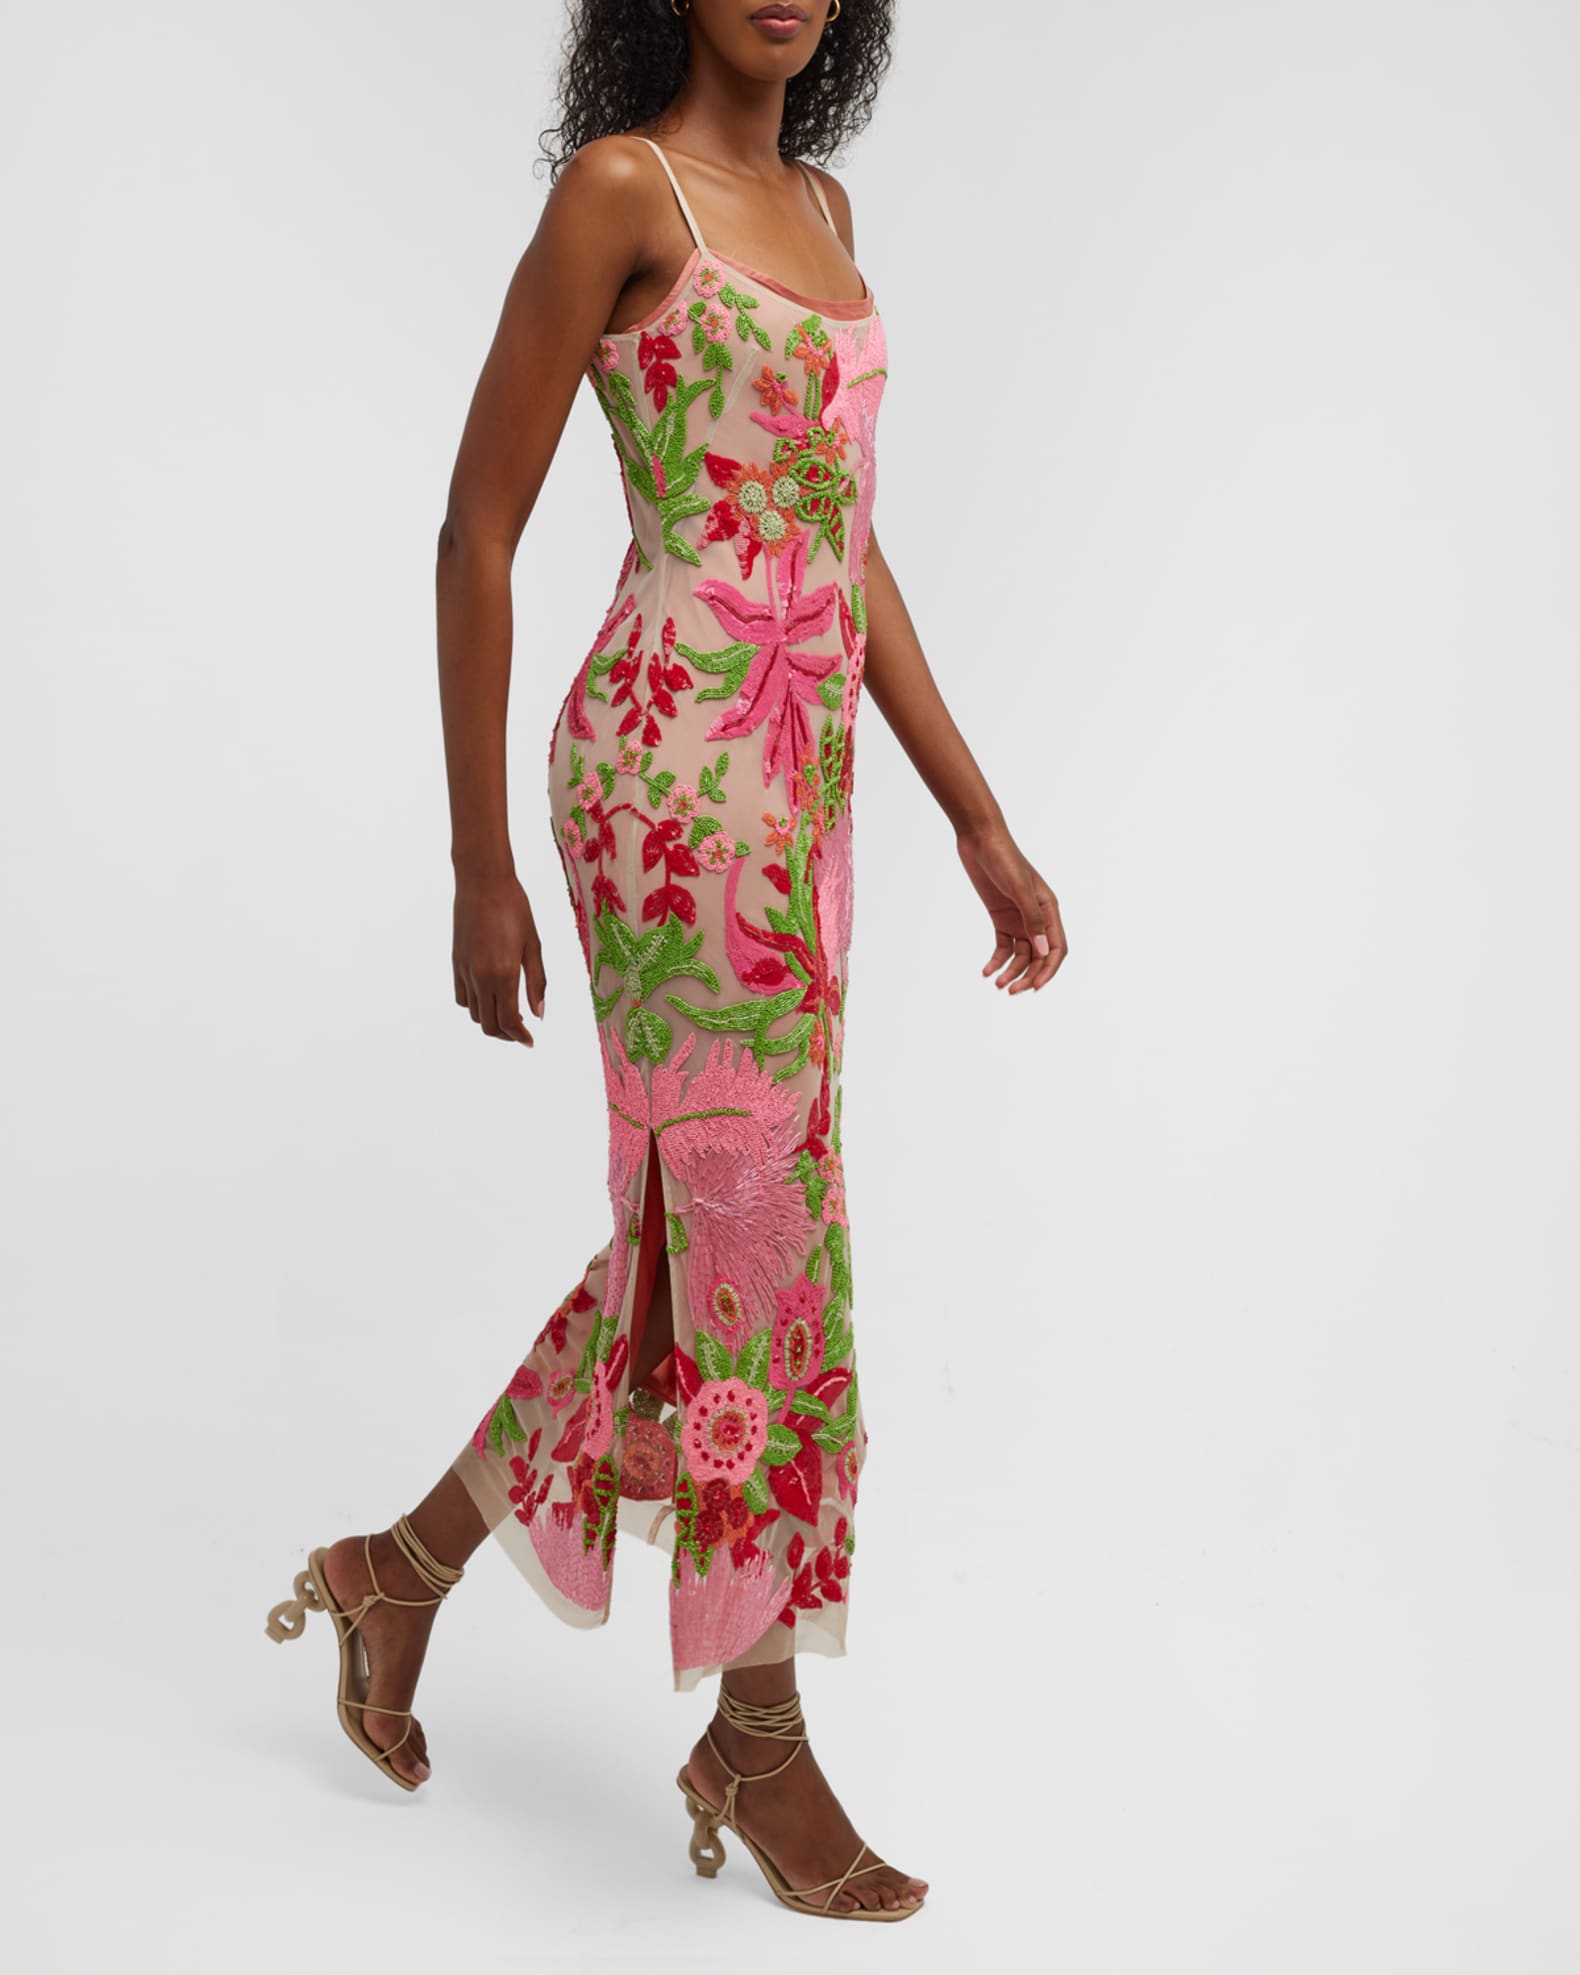 Cult Gaia Kennedy Floral Beaded Sequin Mesh Dress | Neiman Marcus